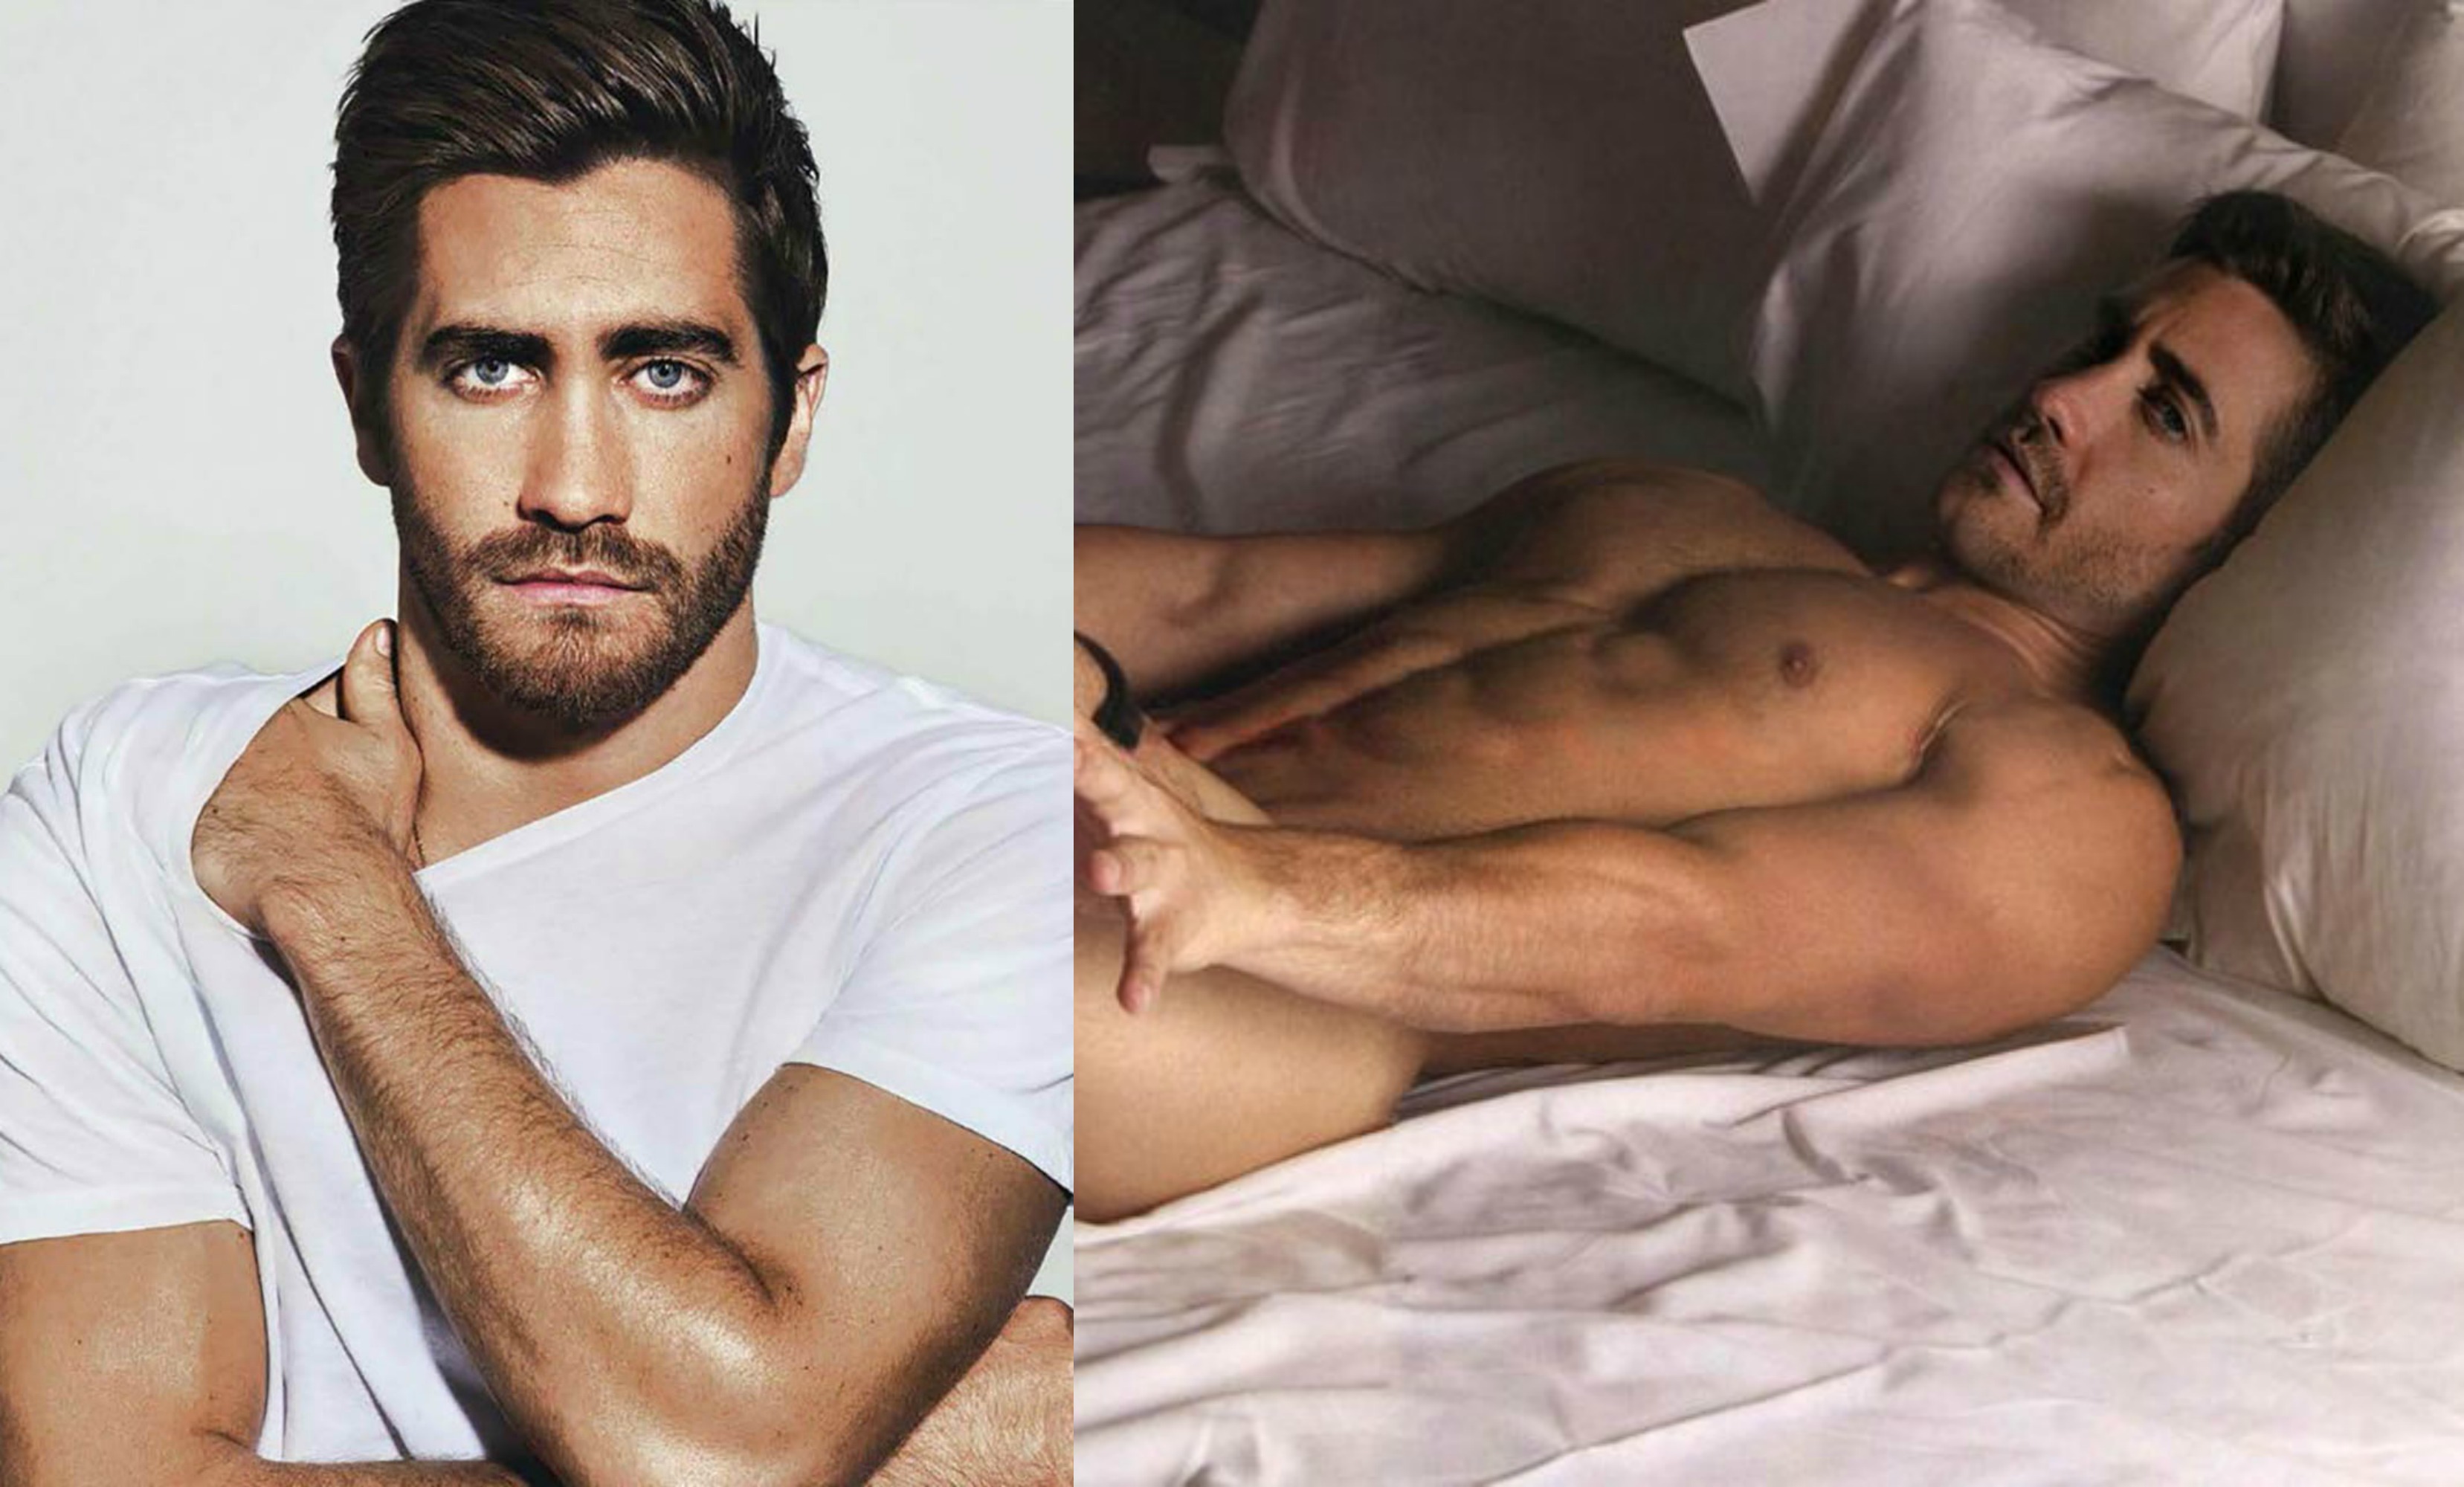 LEAKED: Jake Gyllenhaal Naked Dick Videos Go Viral! 